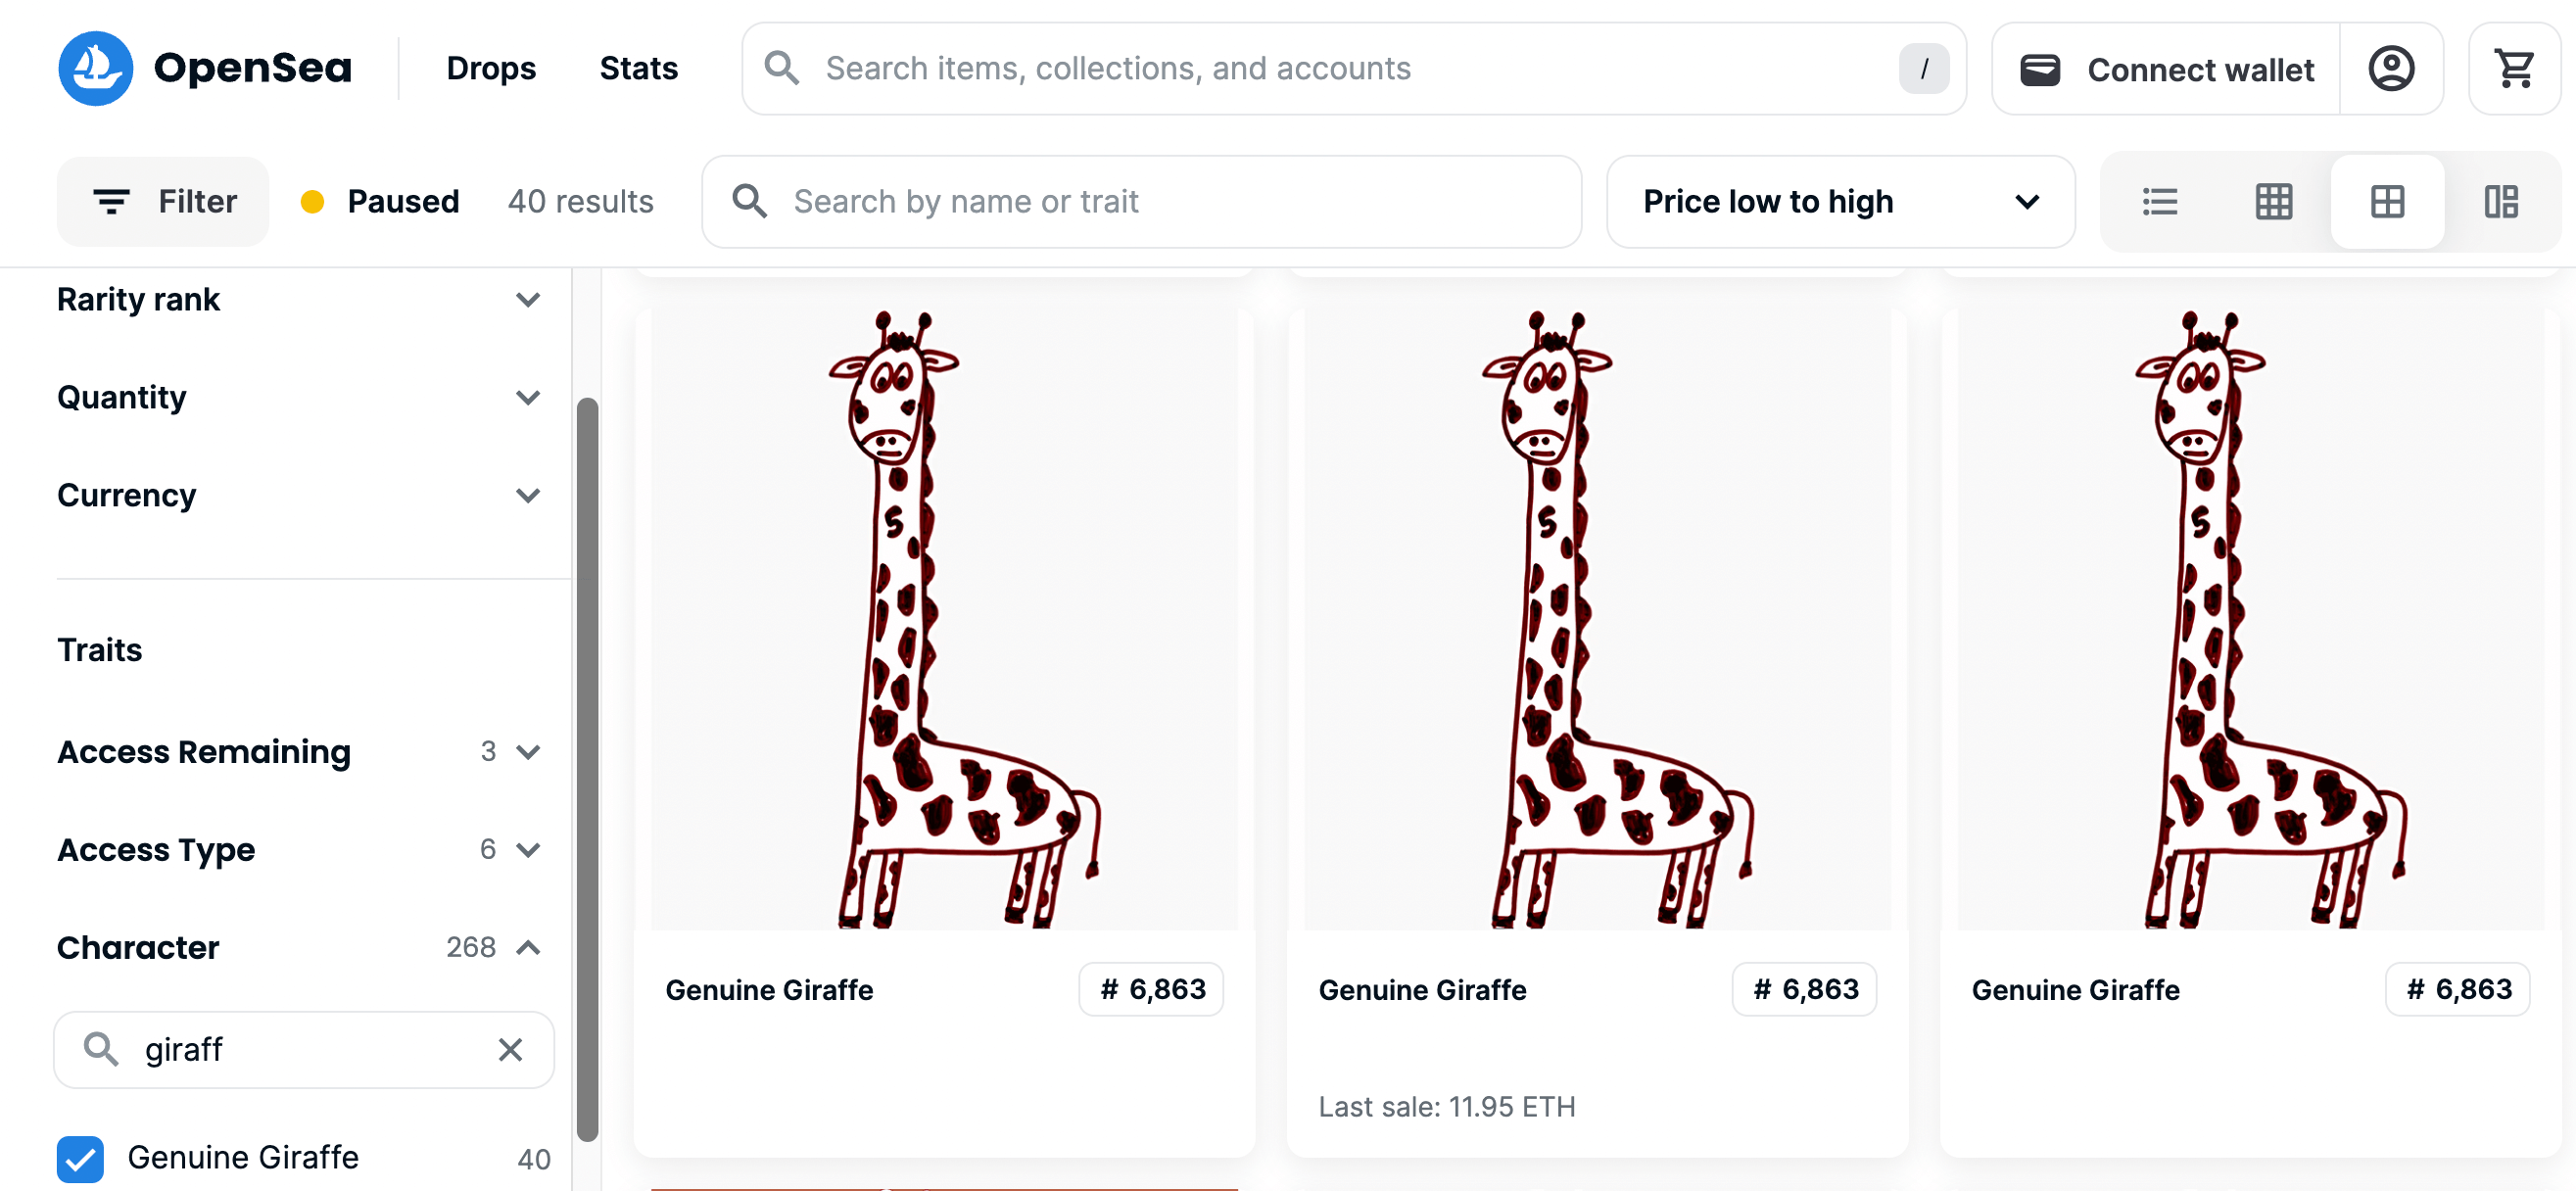 veefriends-series-1-genuine-giraffe-art